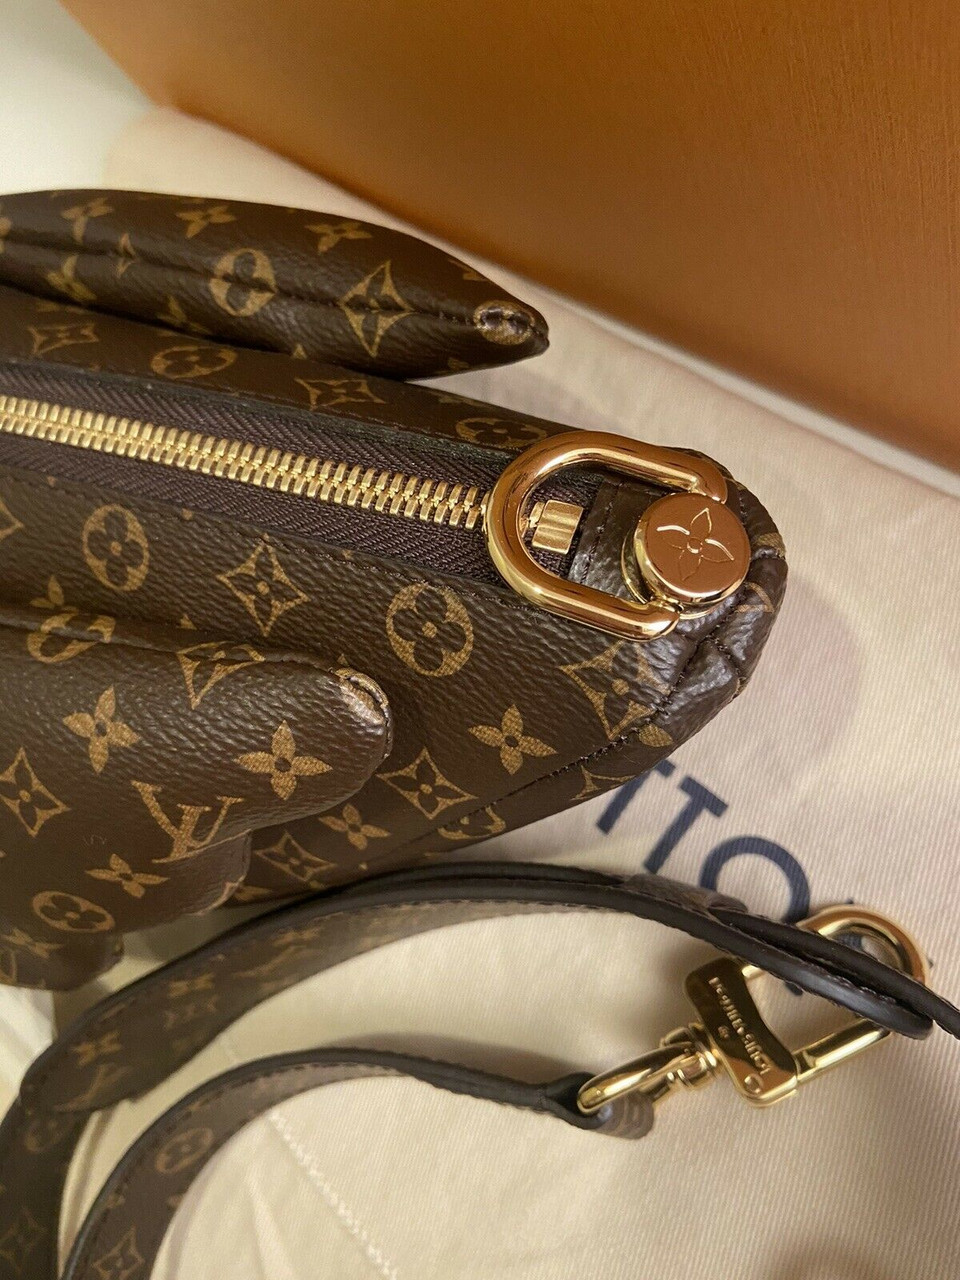 Nigo x Louis Vuitton Monogram Duck Bag : r/FashionReps